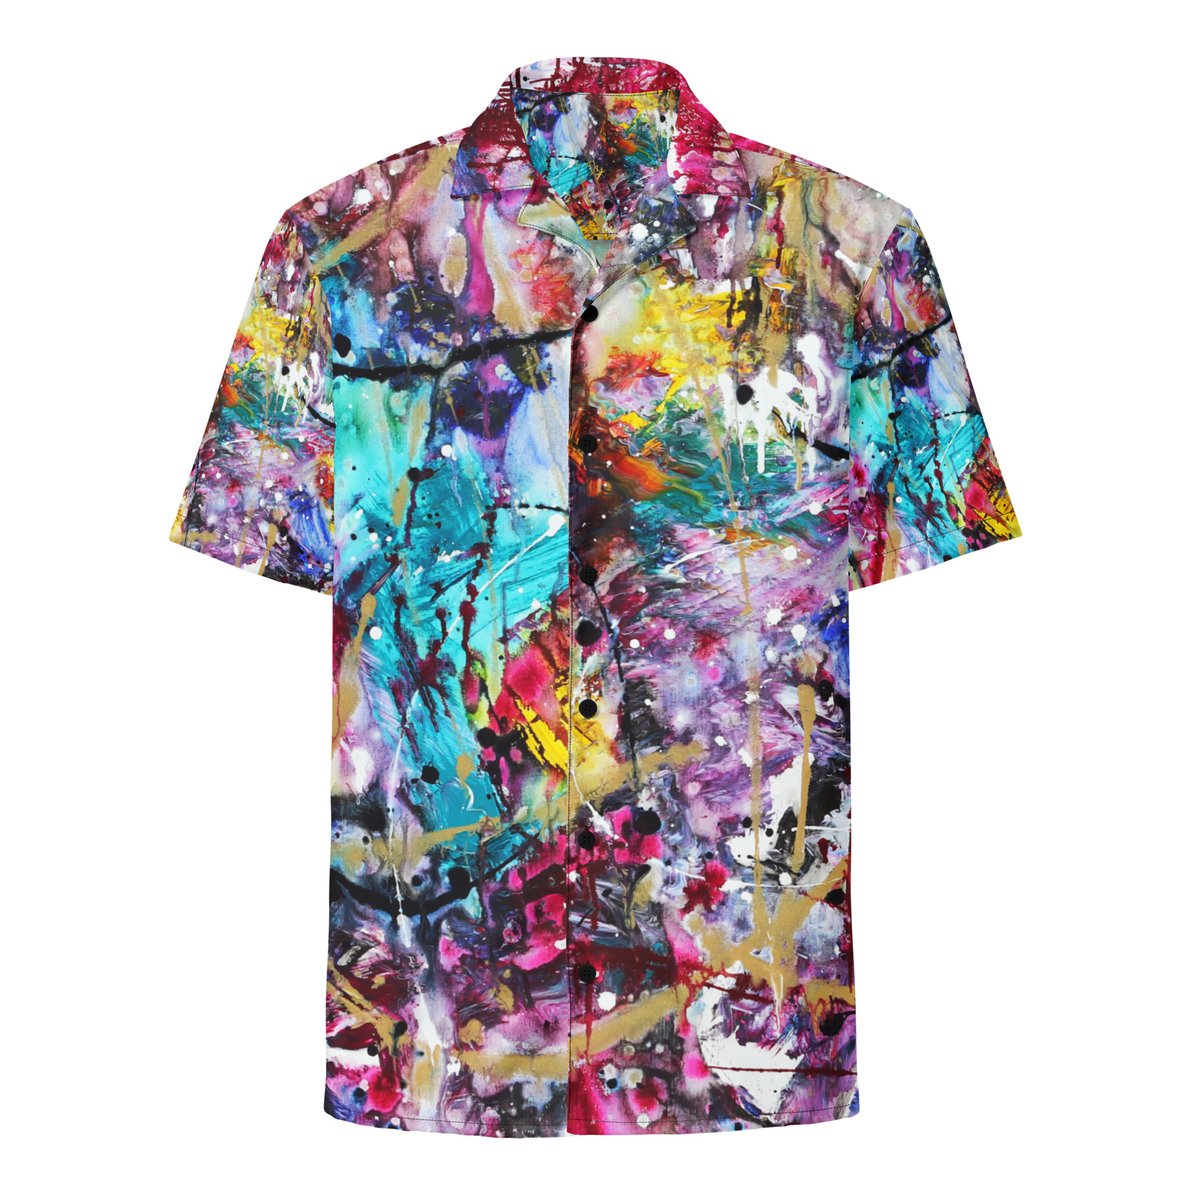 Image of "Cosmic Jazz" button shirt